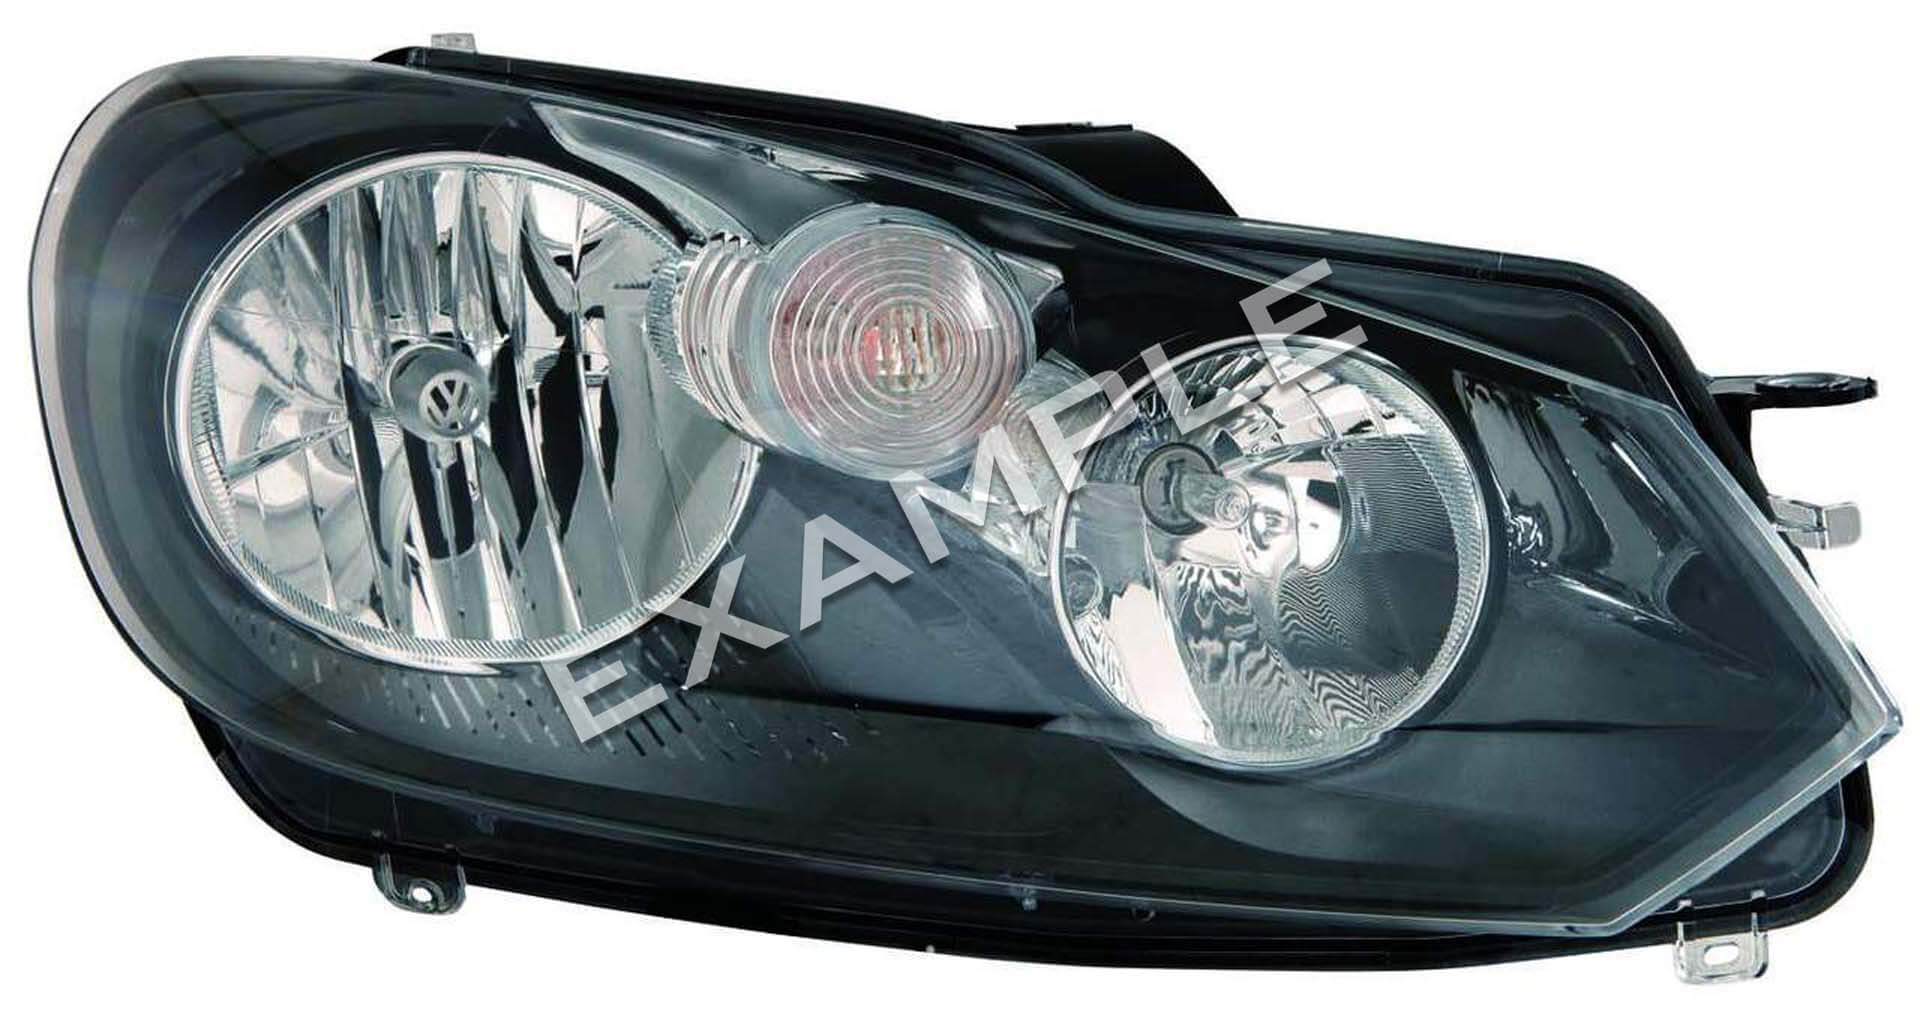 VW Golf MK VII 12-17 bi-xenon HID light upgrade kit for halogen headlights